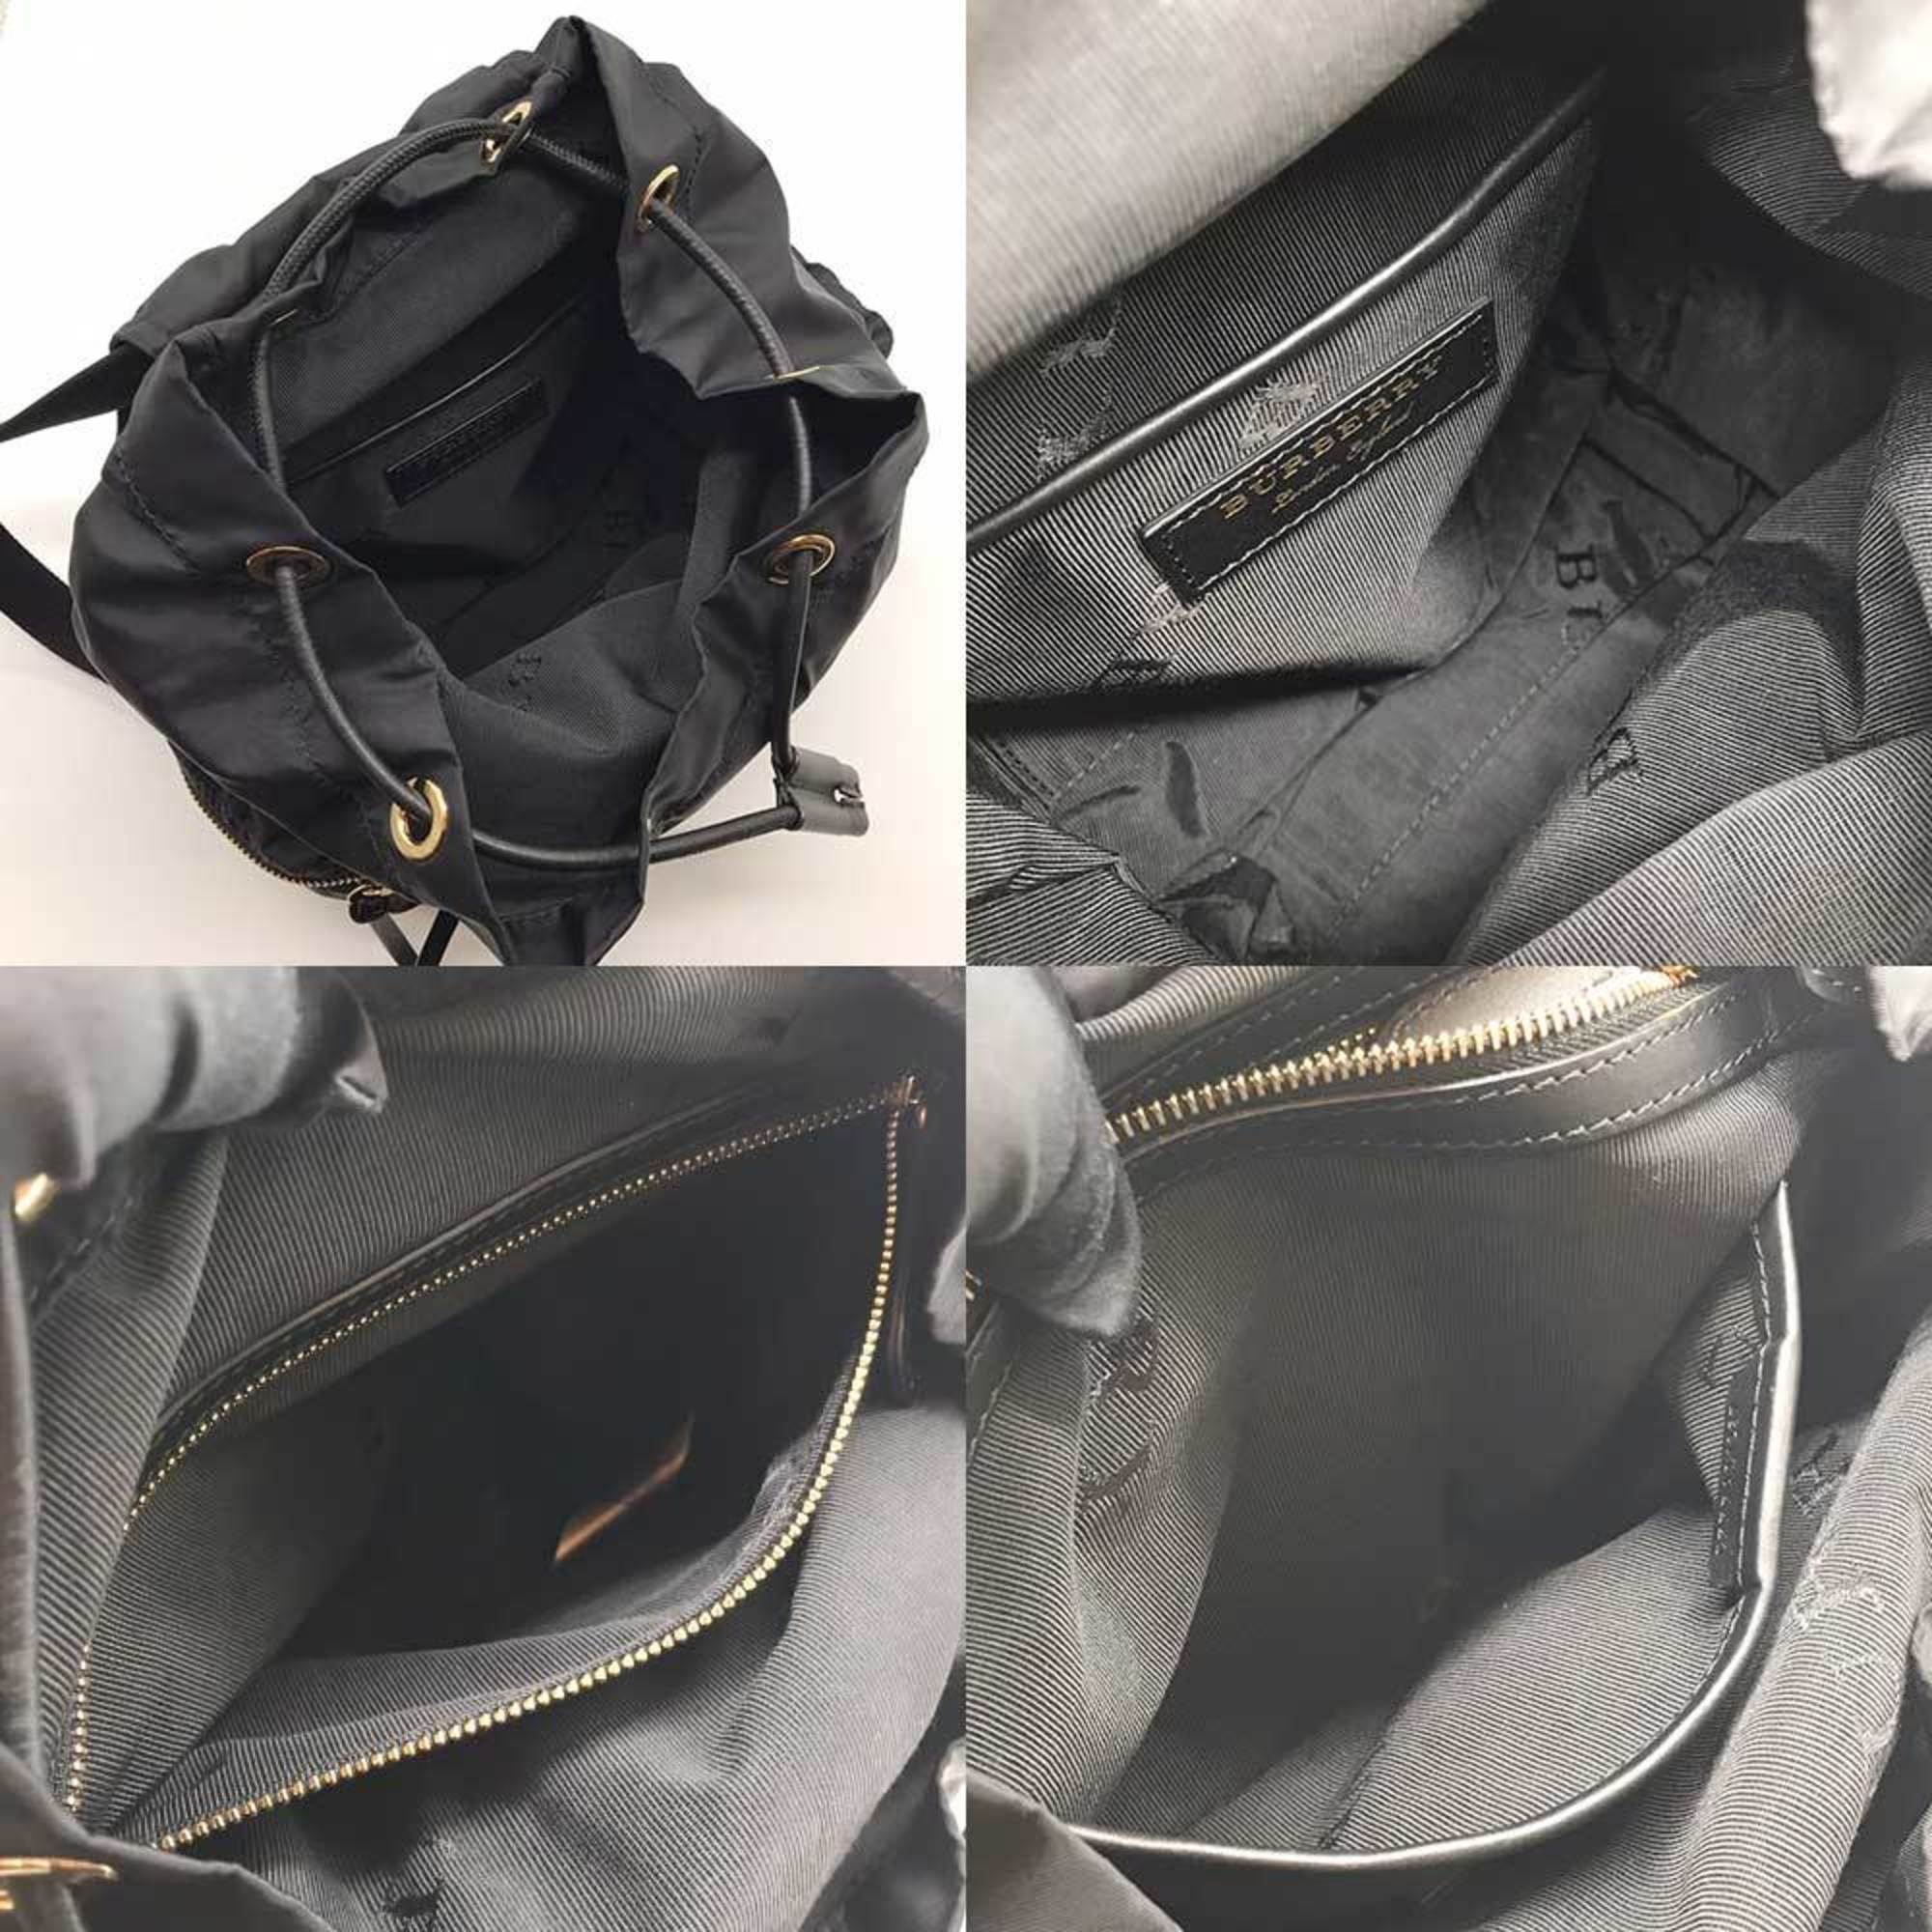 Burberry Rucksack Backpack Black Nylon Leather 4016622 BURBERRY